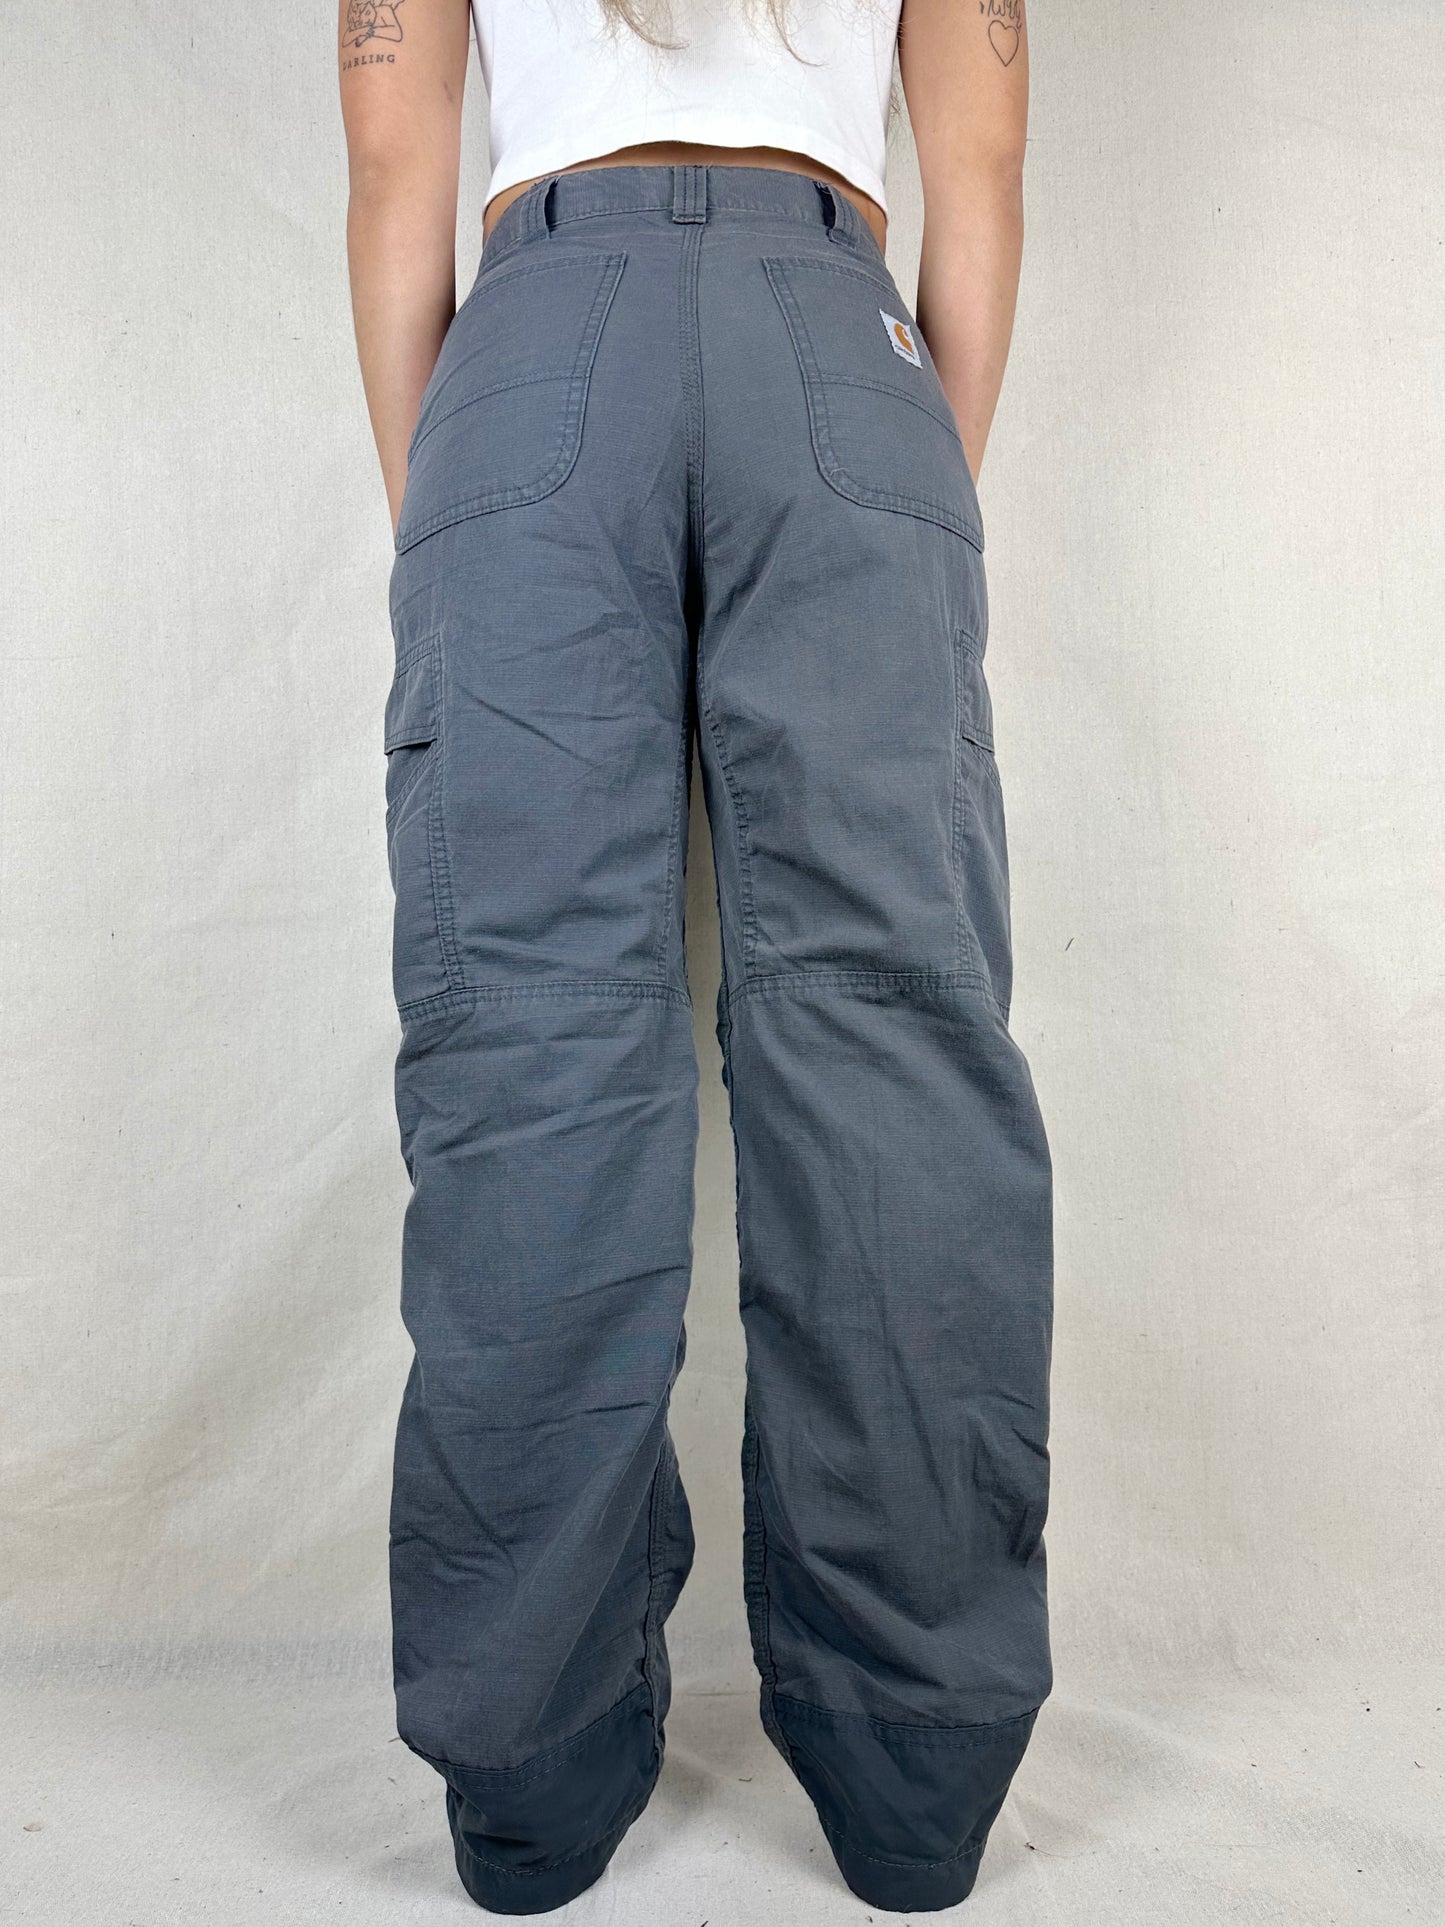 90's Carhartt Vintage Cargo Pants Size 30x30